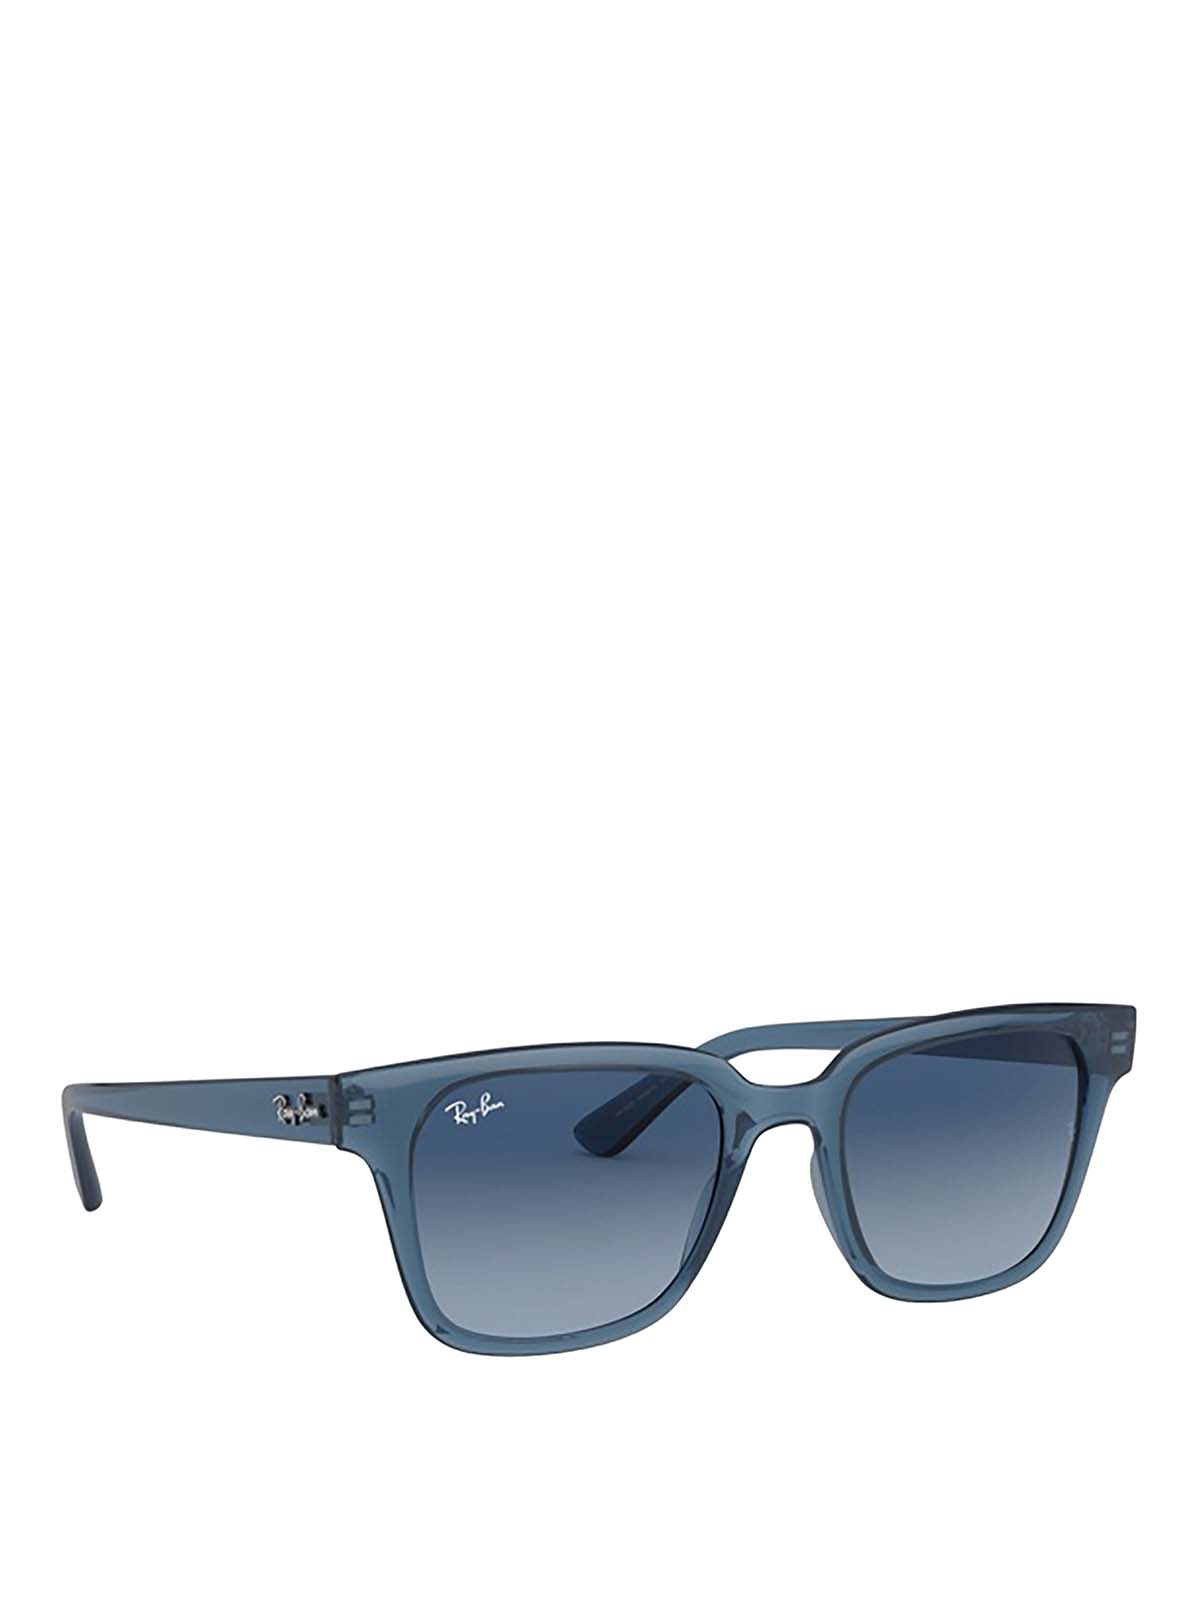 Sunglasses Ray Ban - RB4323 transparent blue sunglasses - RB43236448Q8